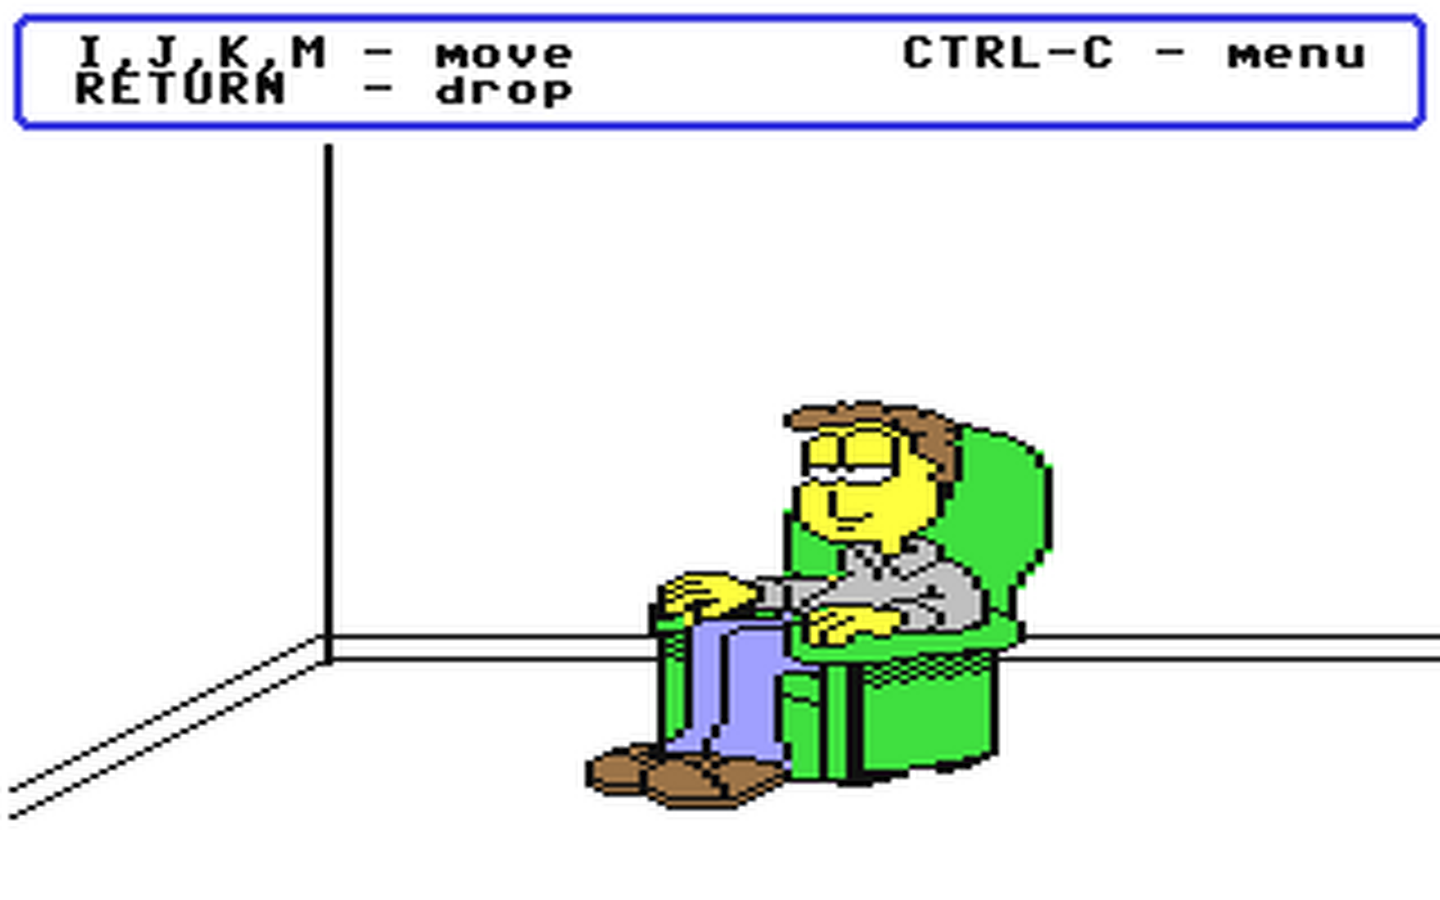 C64 GameBase Create_with_Garfield! DLM_(Developmental_Learning_Materials) 1986